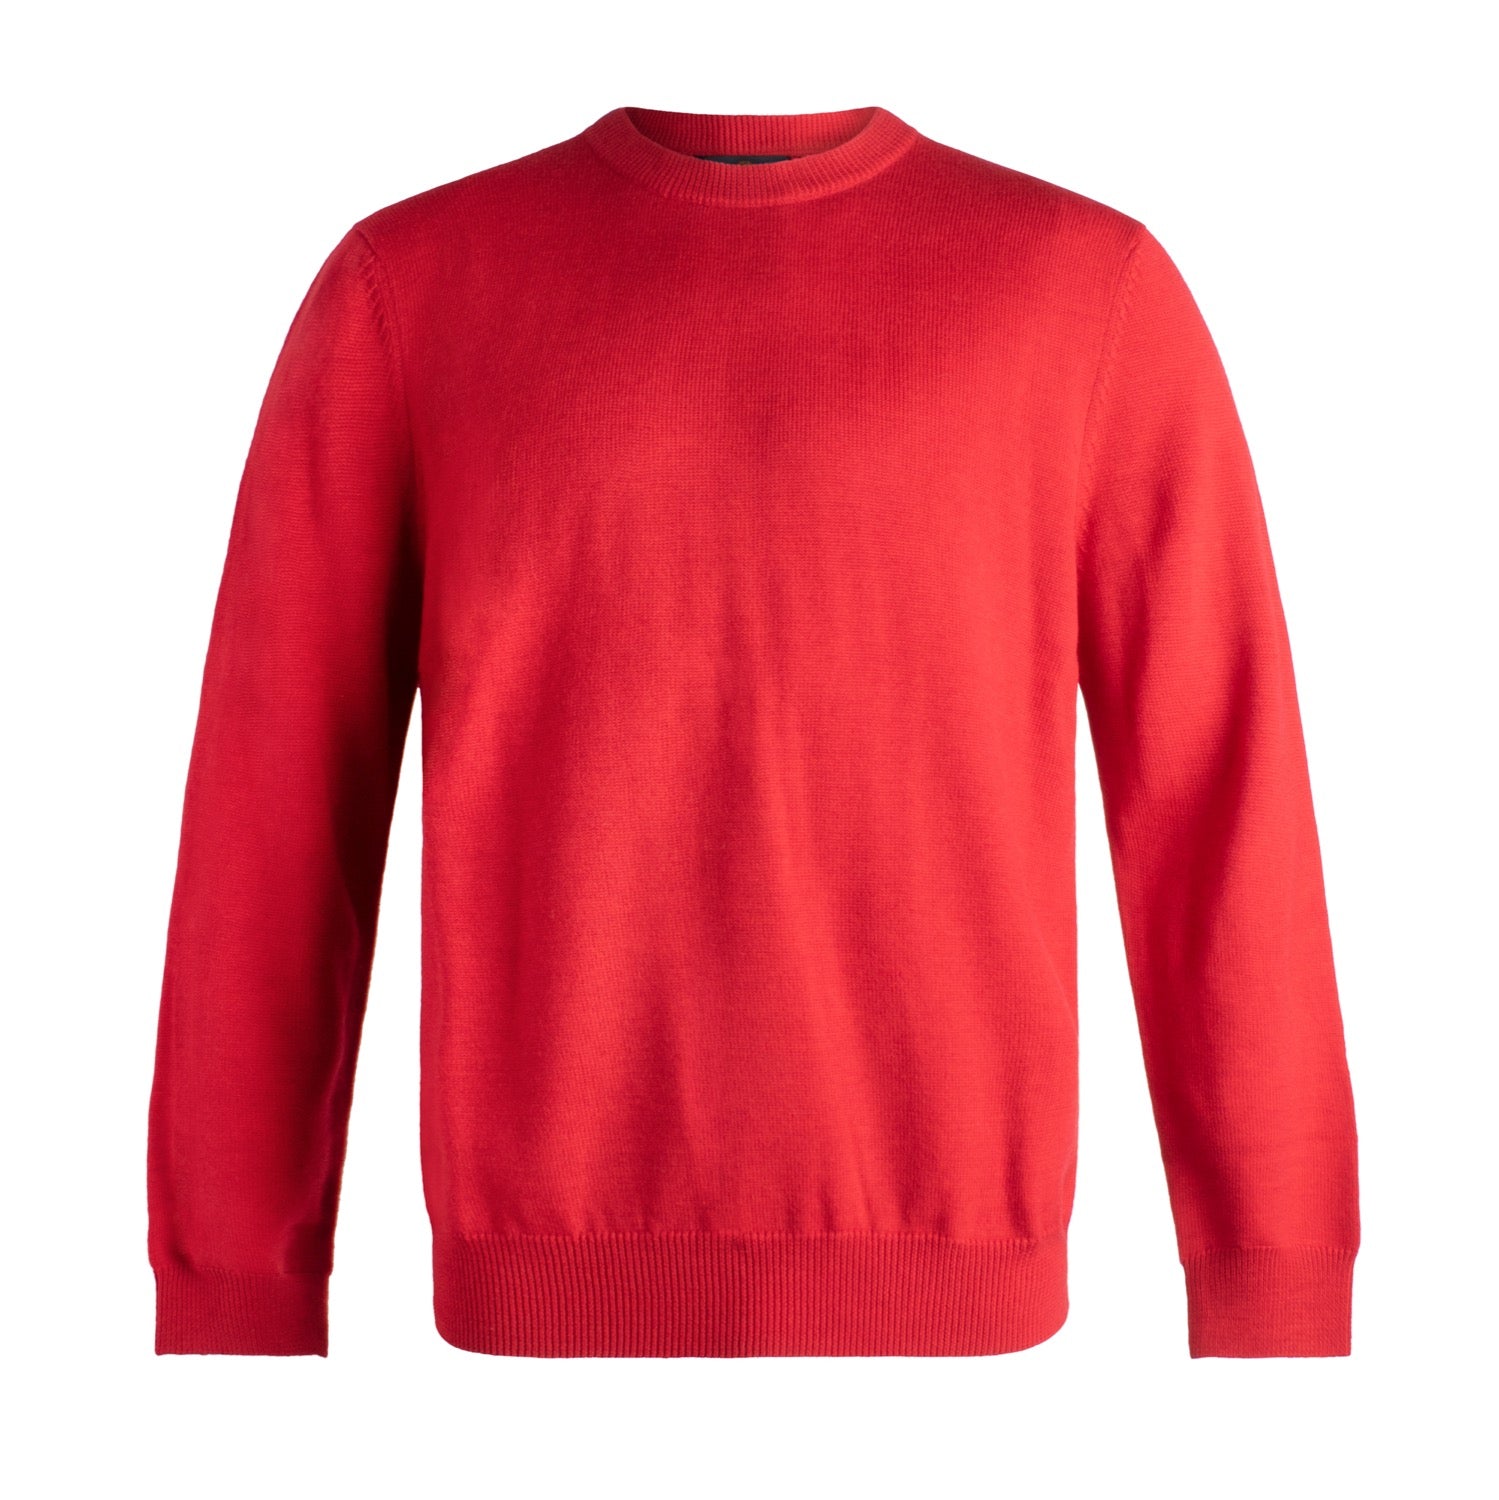 Extra Fine 'Zegna Baruffa' Merino Wool Crew Neck Sweater in Admiral Red by Viyella